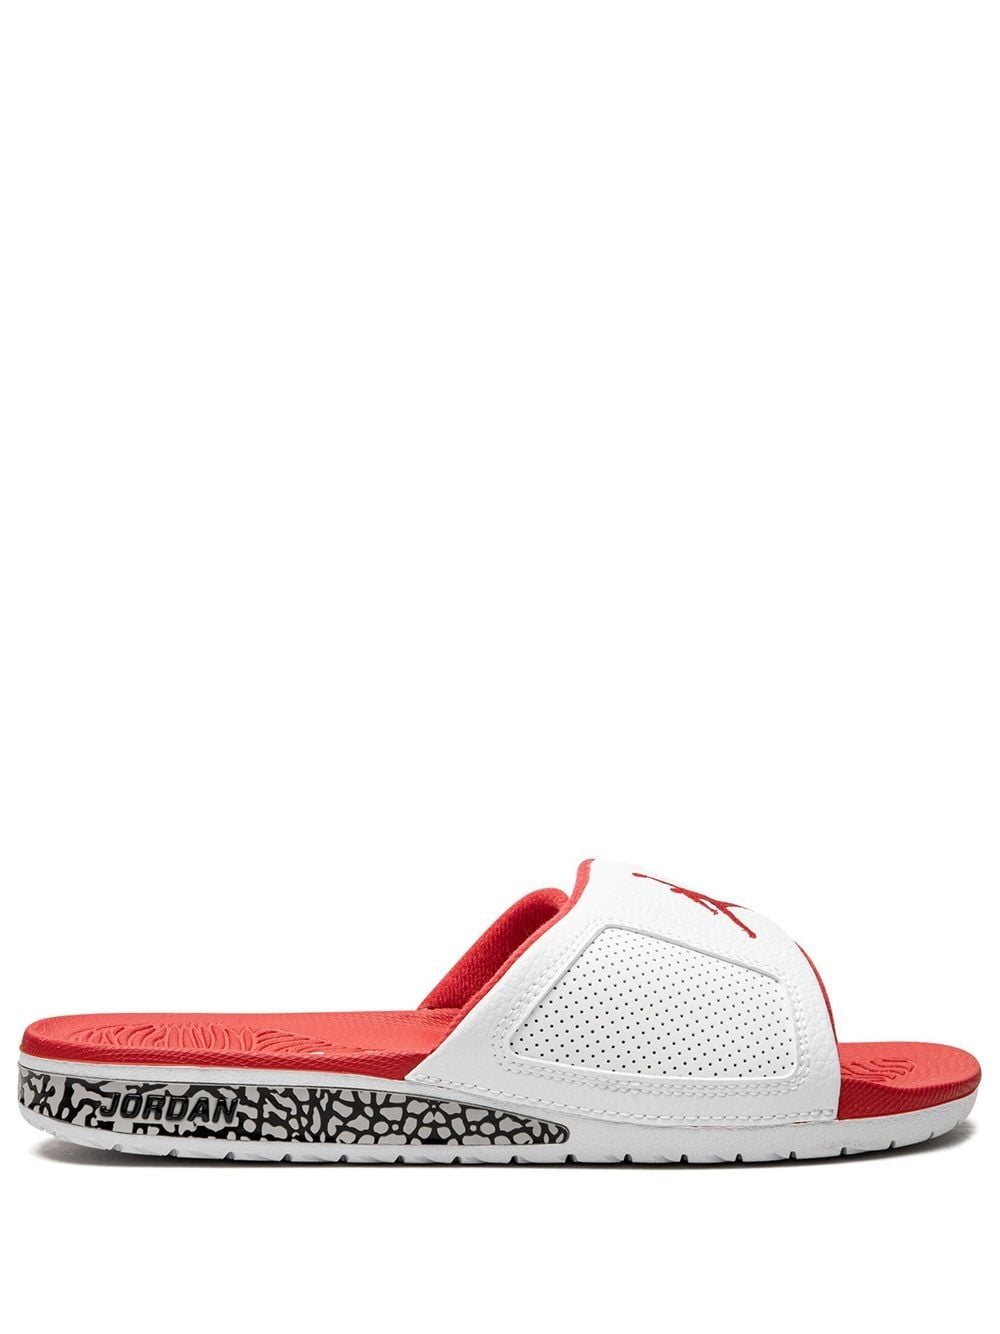 Jordan Jordan Hydro III Retro "Fire Red" sneakers - White